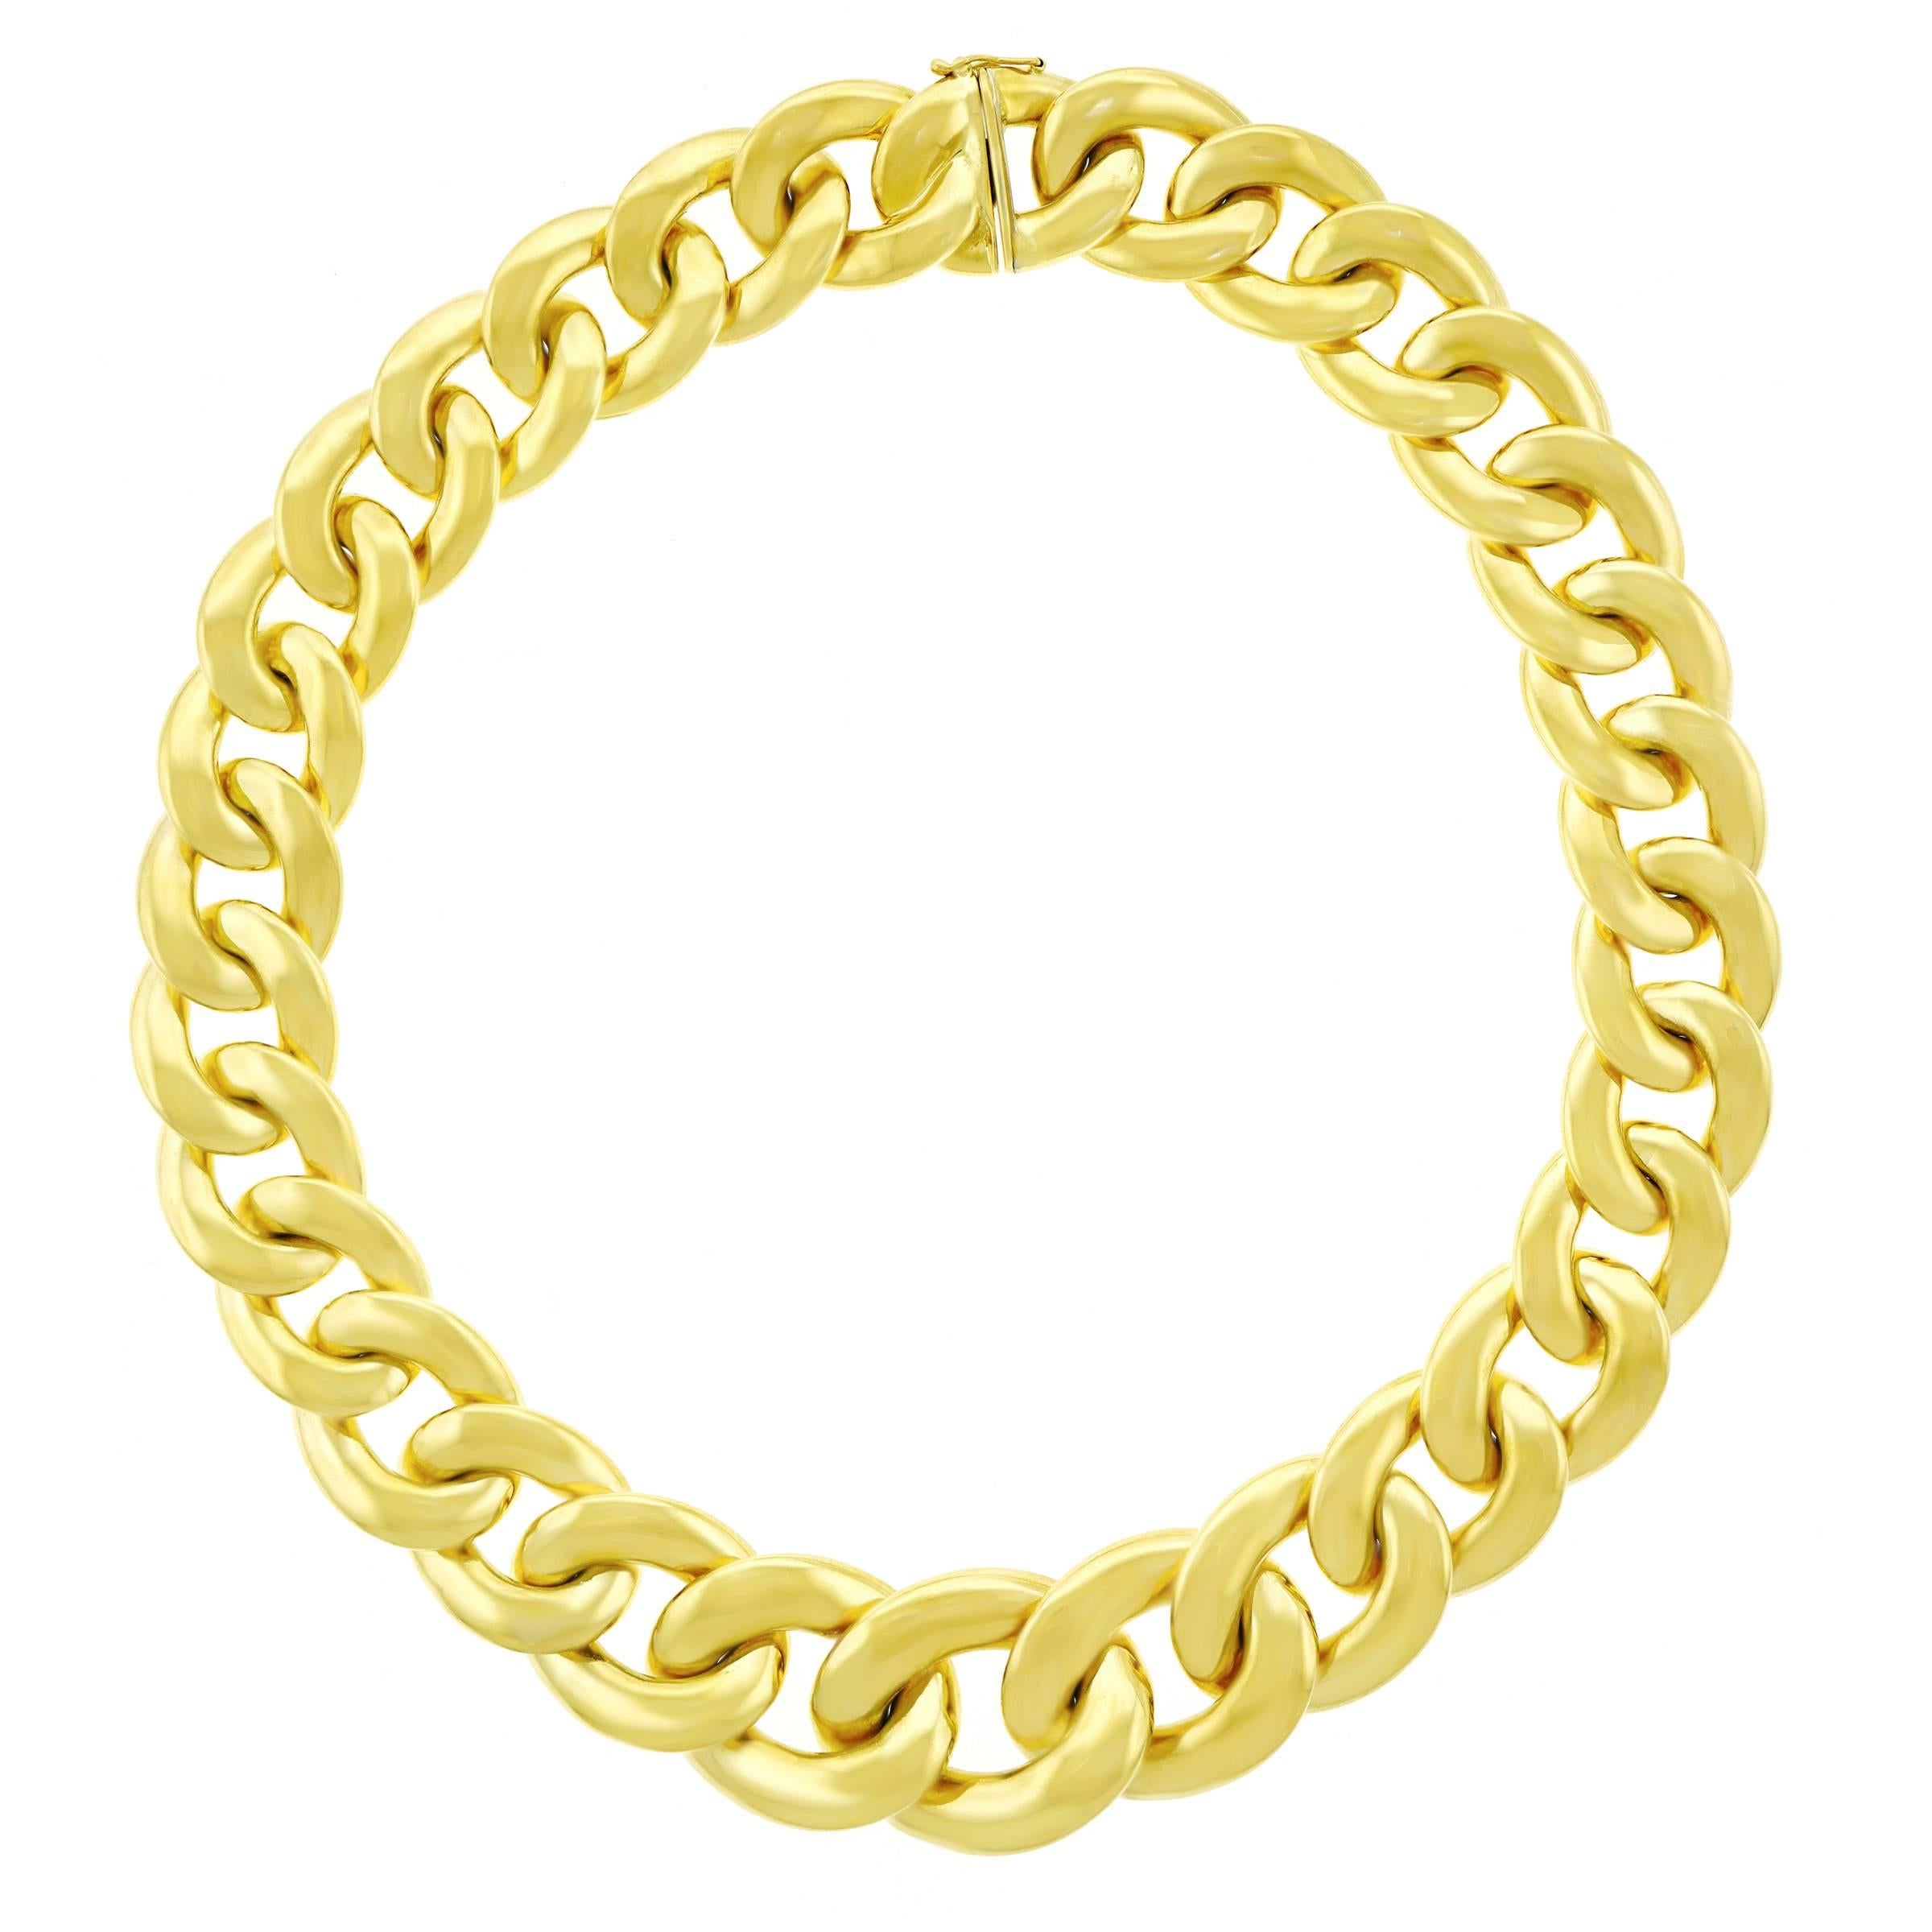 Fabulous 1970s Gold Link Necklace